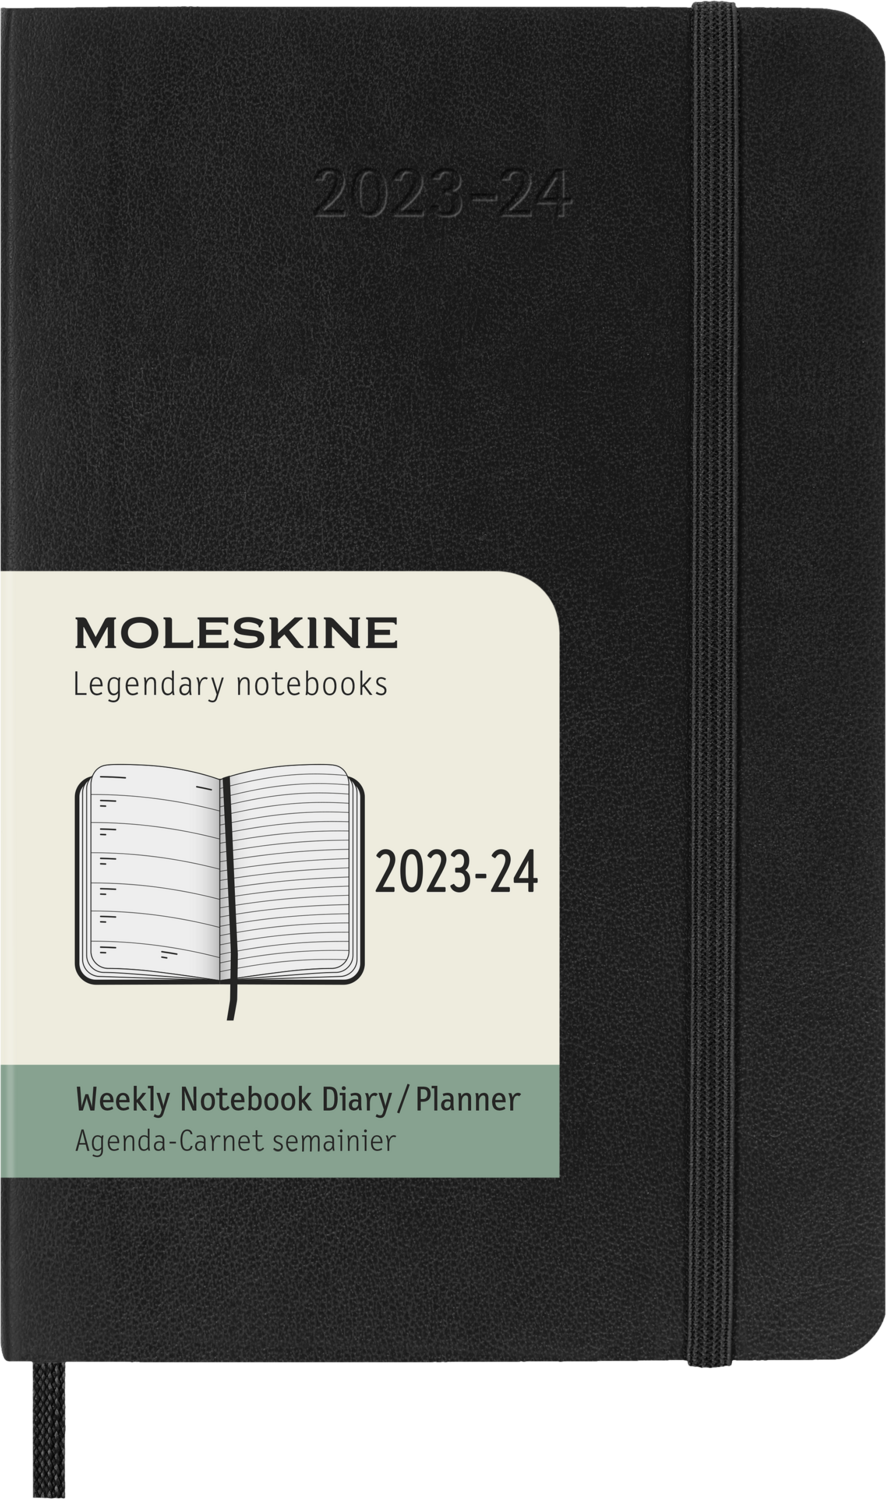 Moleskine weekly notebook diary/planner large 2023-2024